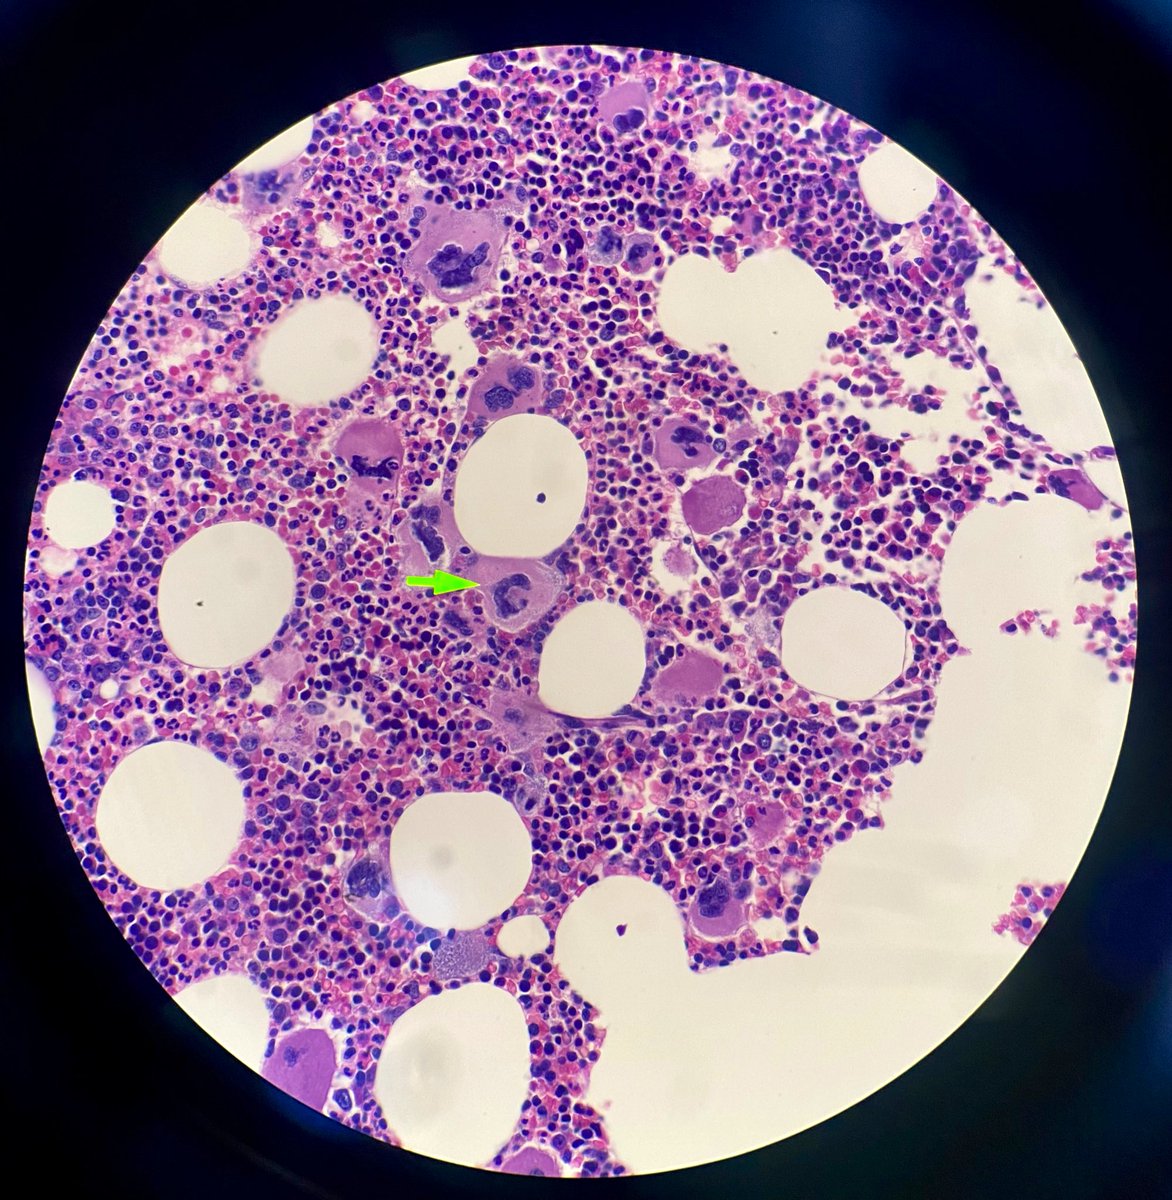 Trombocitemia esencial primaria, megacariocitos con núcleos multilobulados que semejan “asta de ciervo” 🔬
#MorphologyMonday 
#Hematopathology